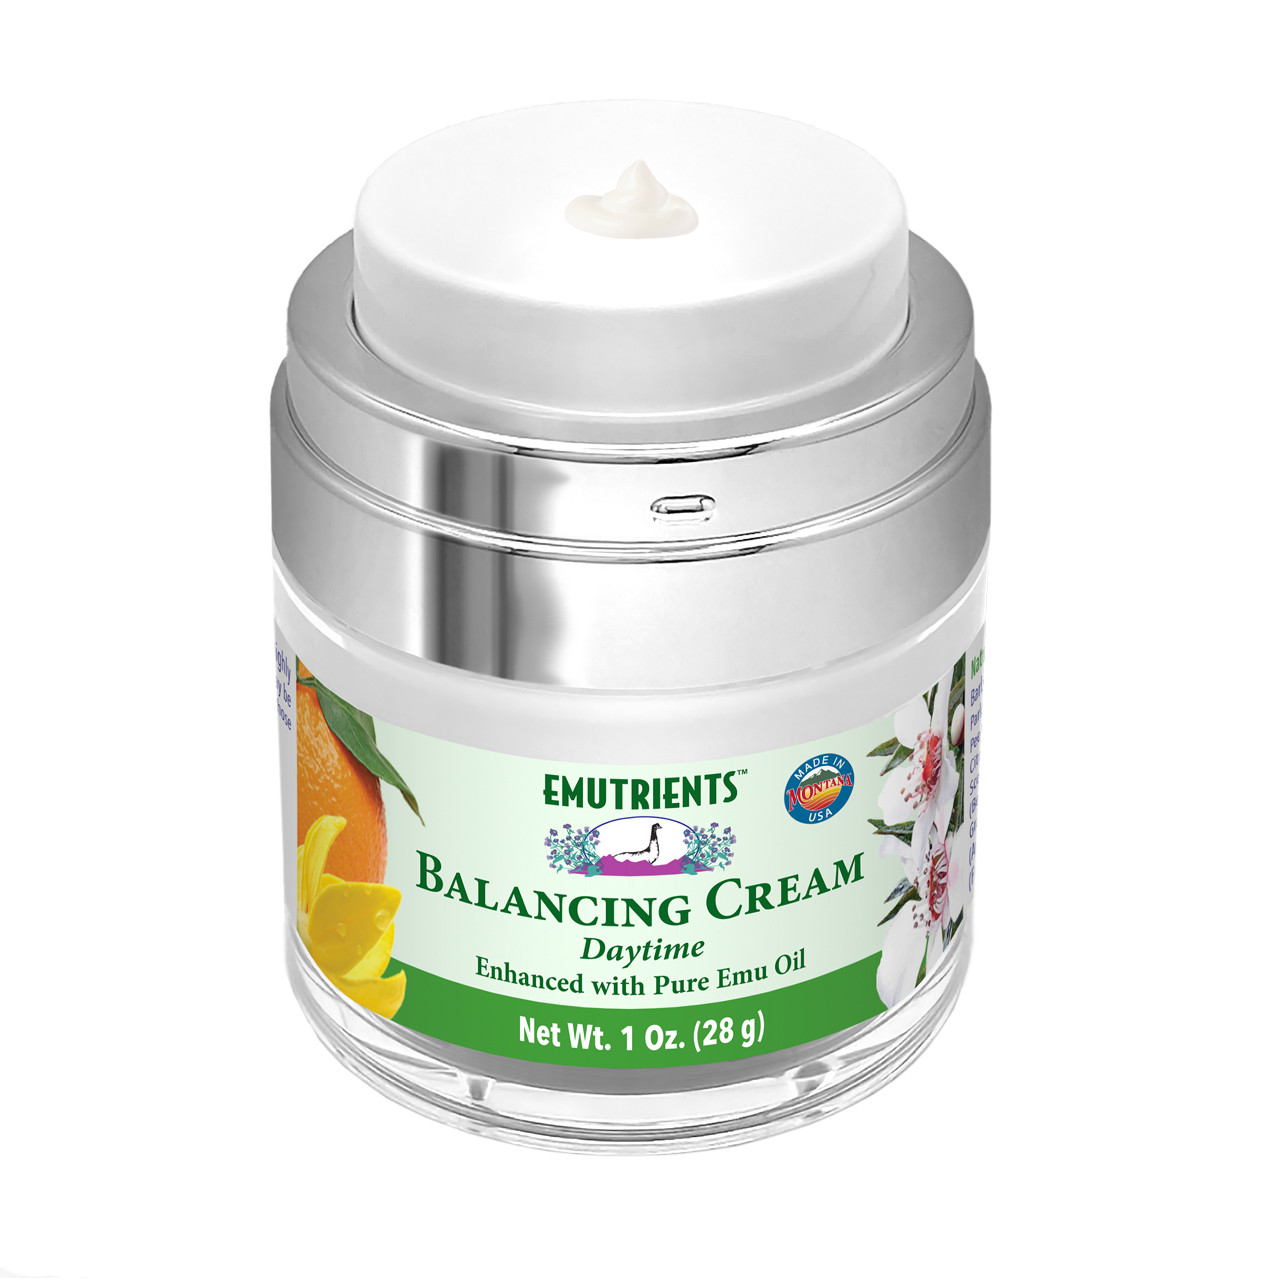 EMUTRIENTS™ Balancing Skin Cream comes in airless pump jar.